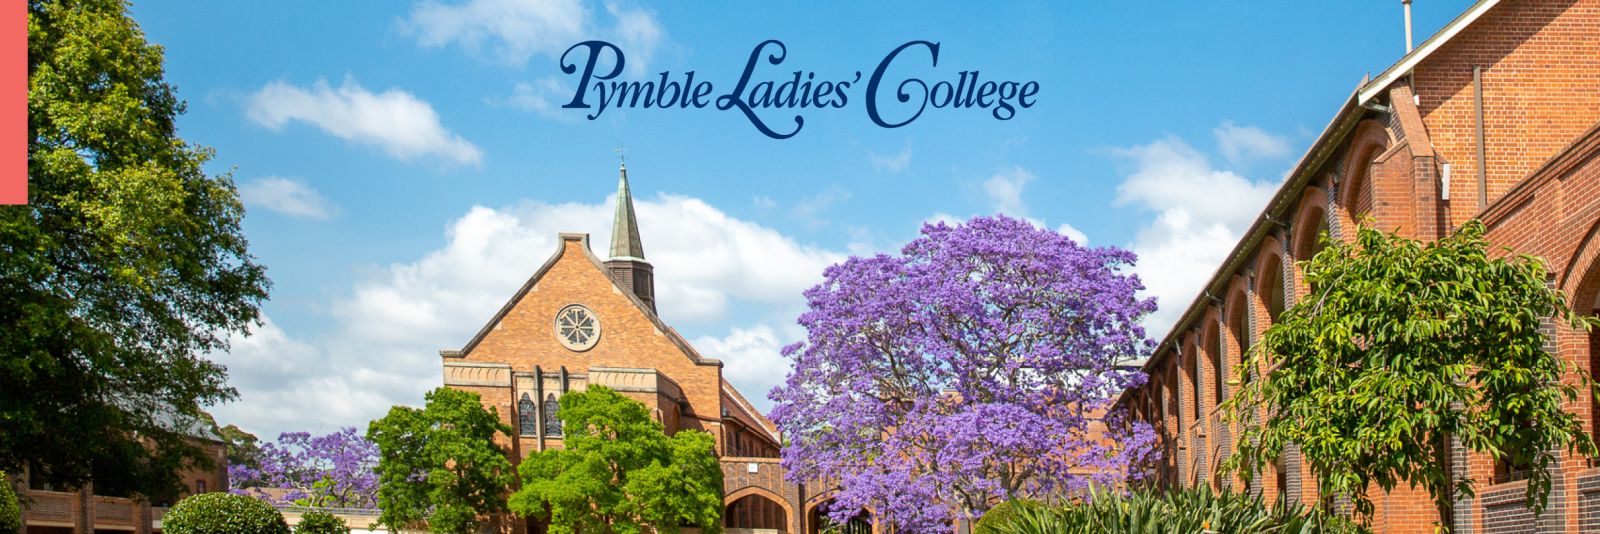 Pymble Ladies' College career portal